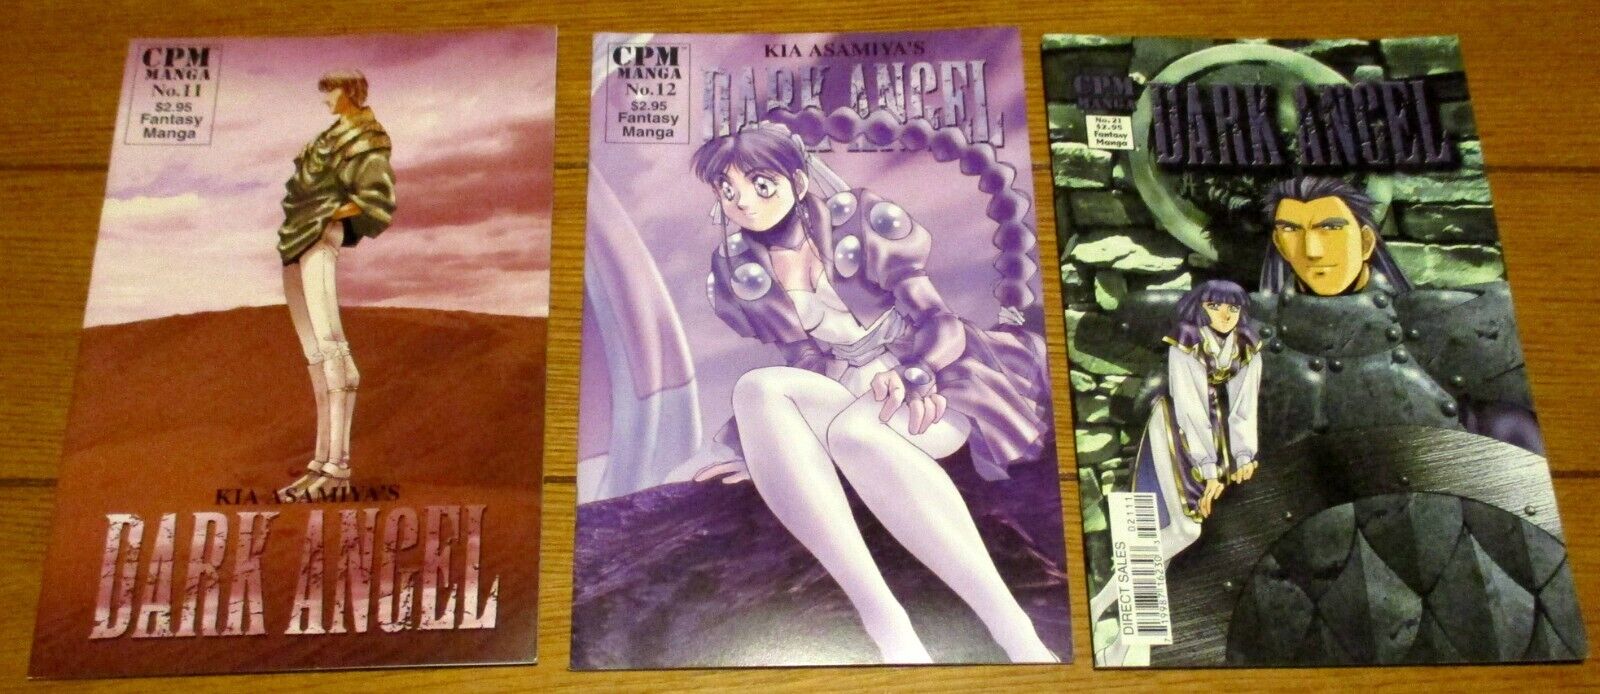 CPA Fantasy Manga Dark Angel Comic Books #11 + #12 + #21     2000-2001